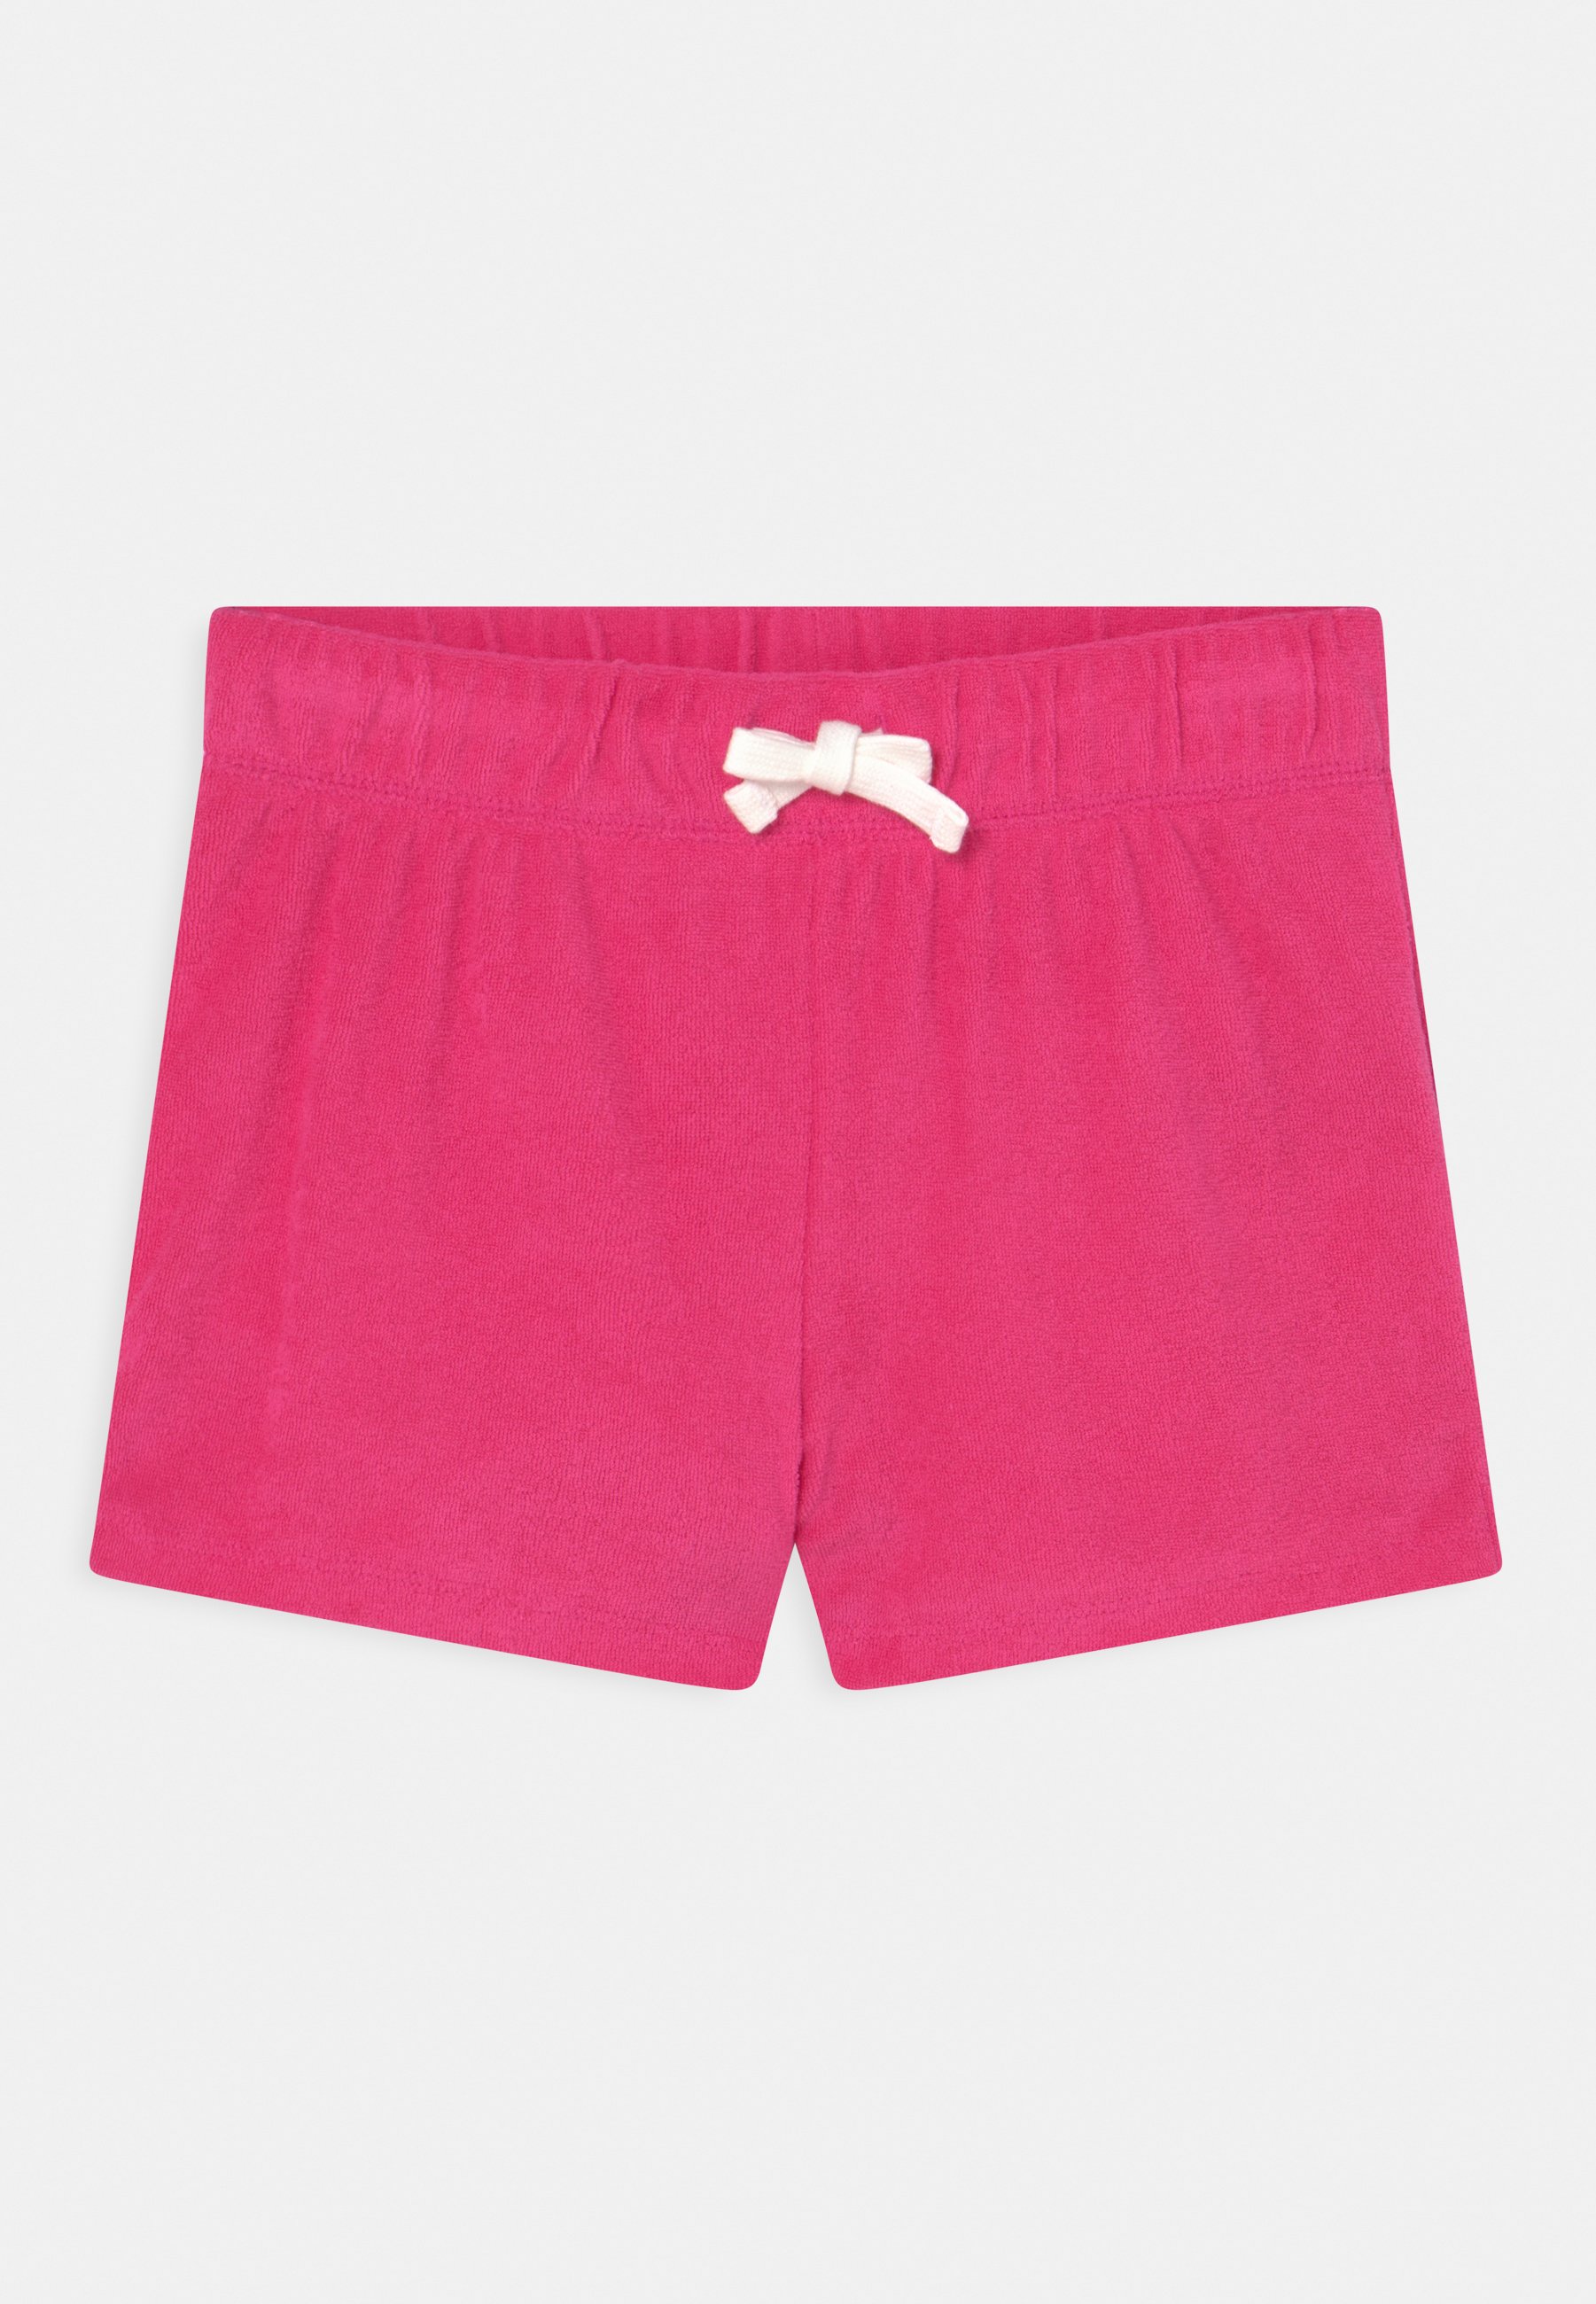 GAP GIRLS - Shorts - royal fuchsia/pink